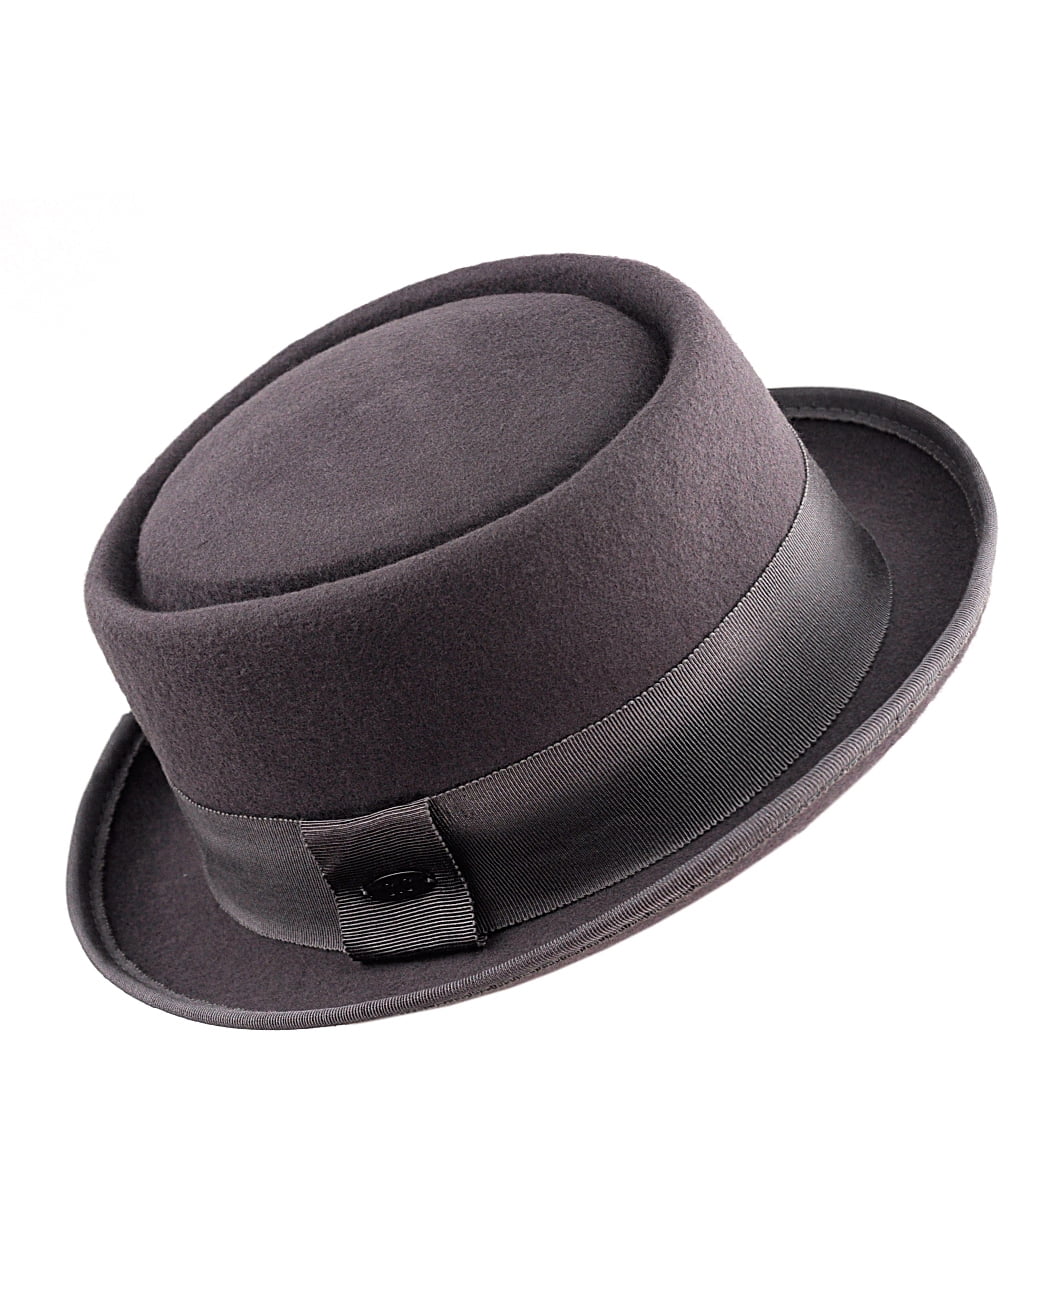 NYFASHION101 Womens Wool Felt Solid Color Band Accent Classic Porkpie Hat